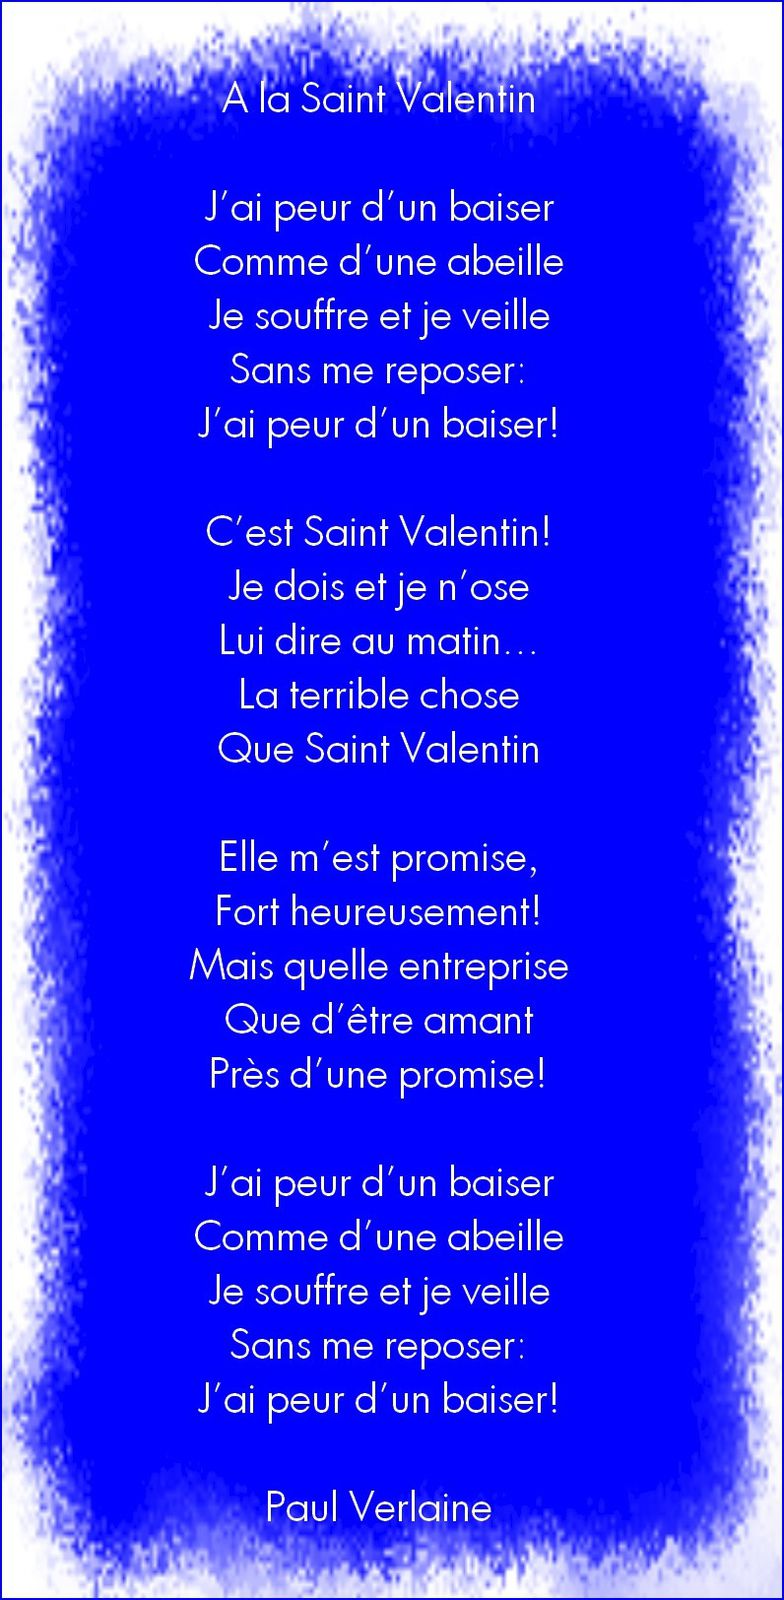 Poesie-A-la-saint-Valentin-Paul-Verlaine-2011.jpg